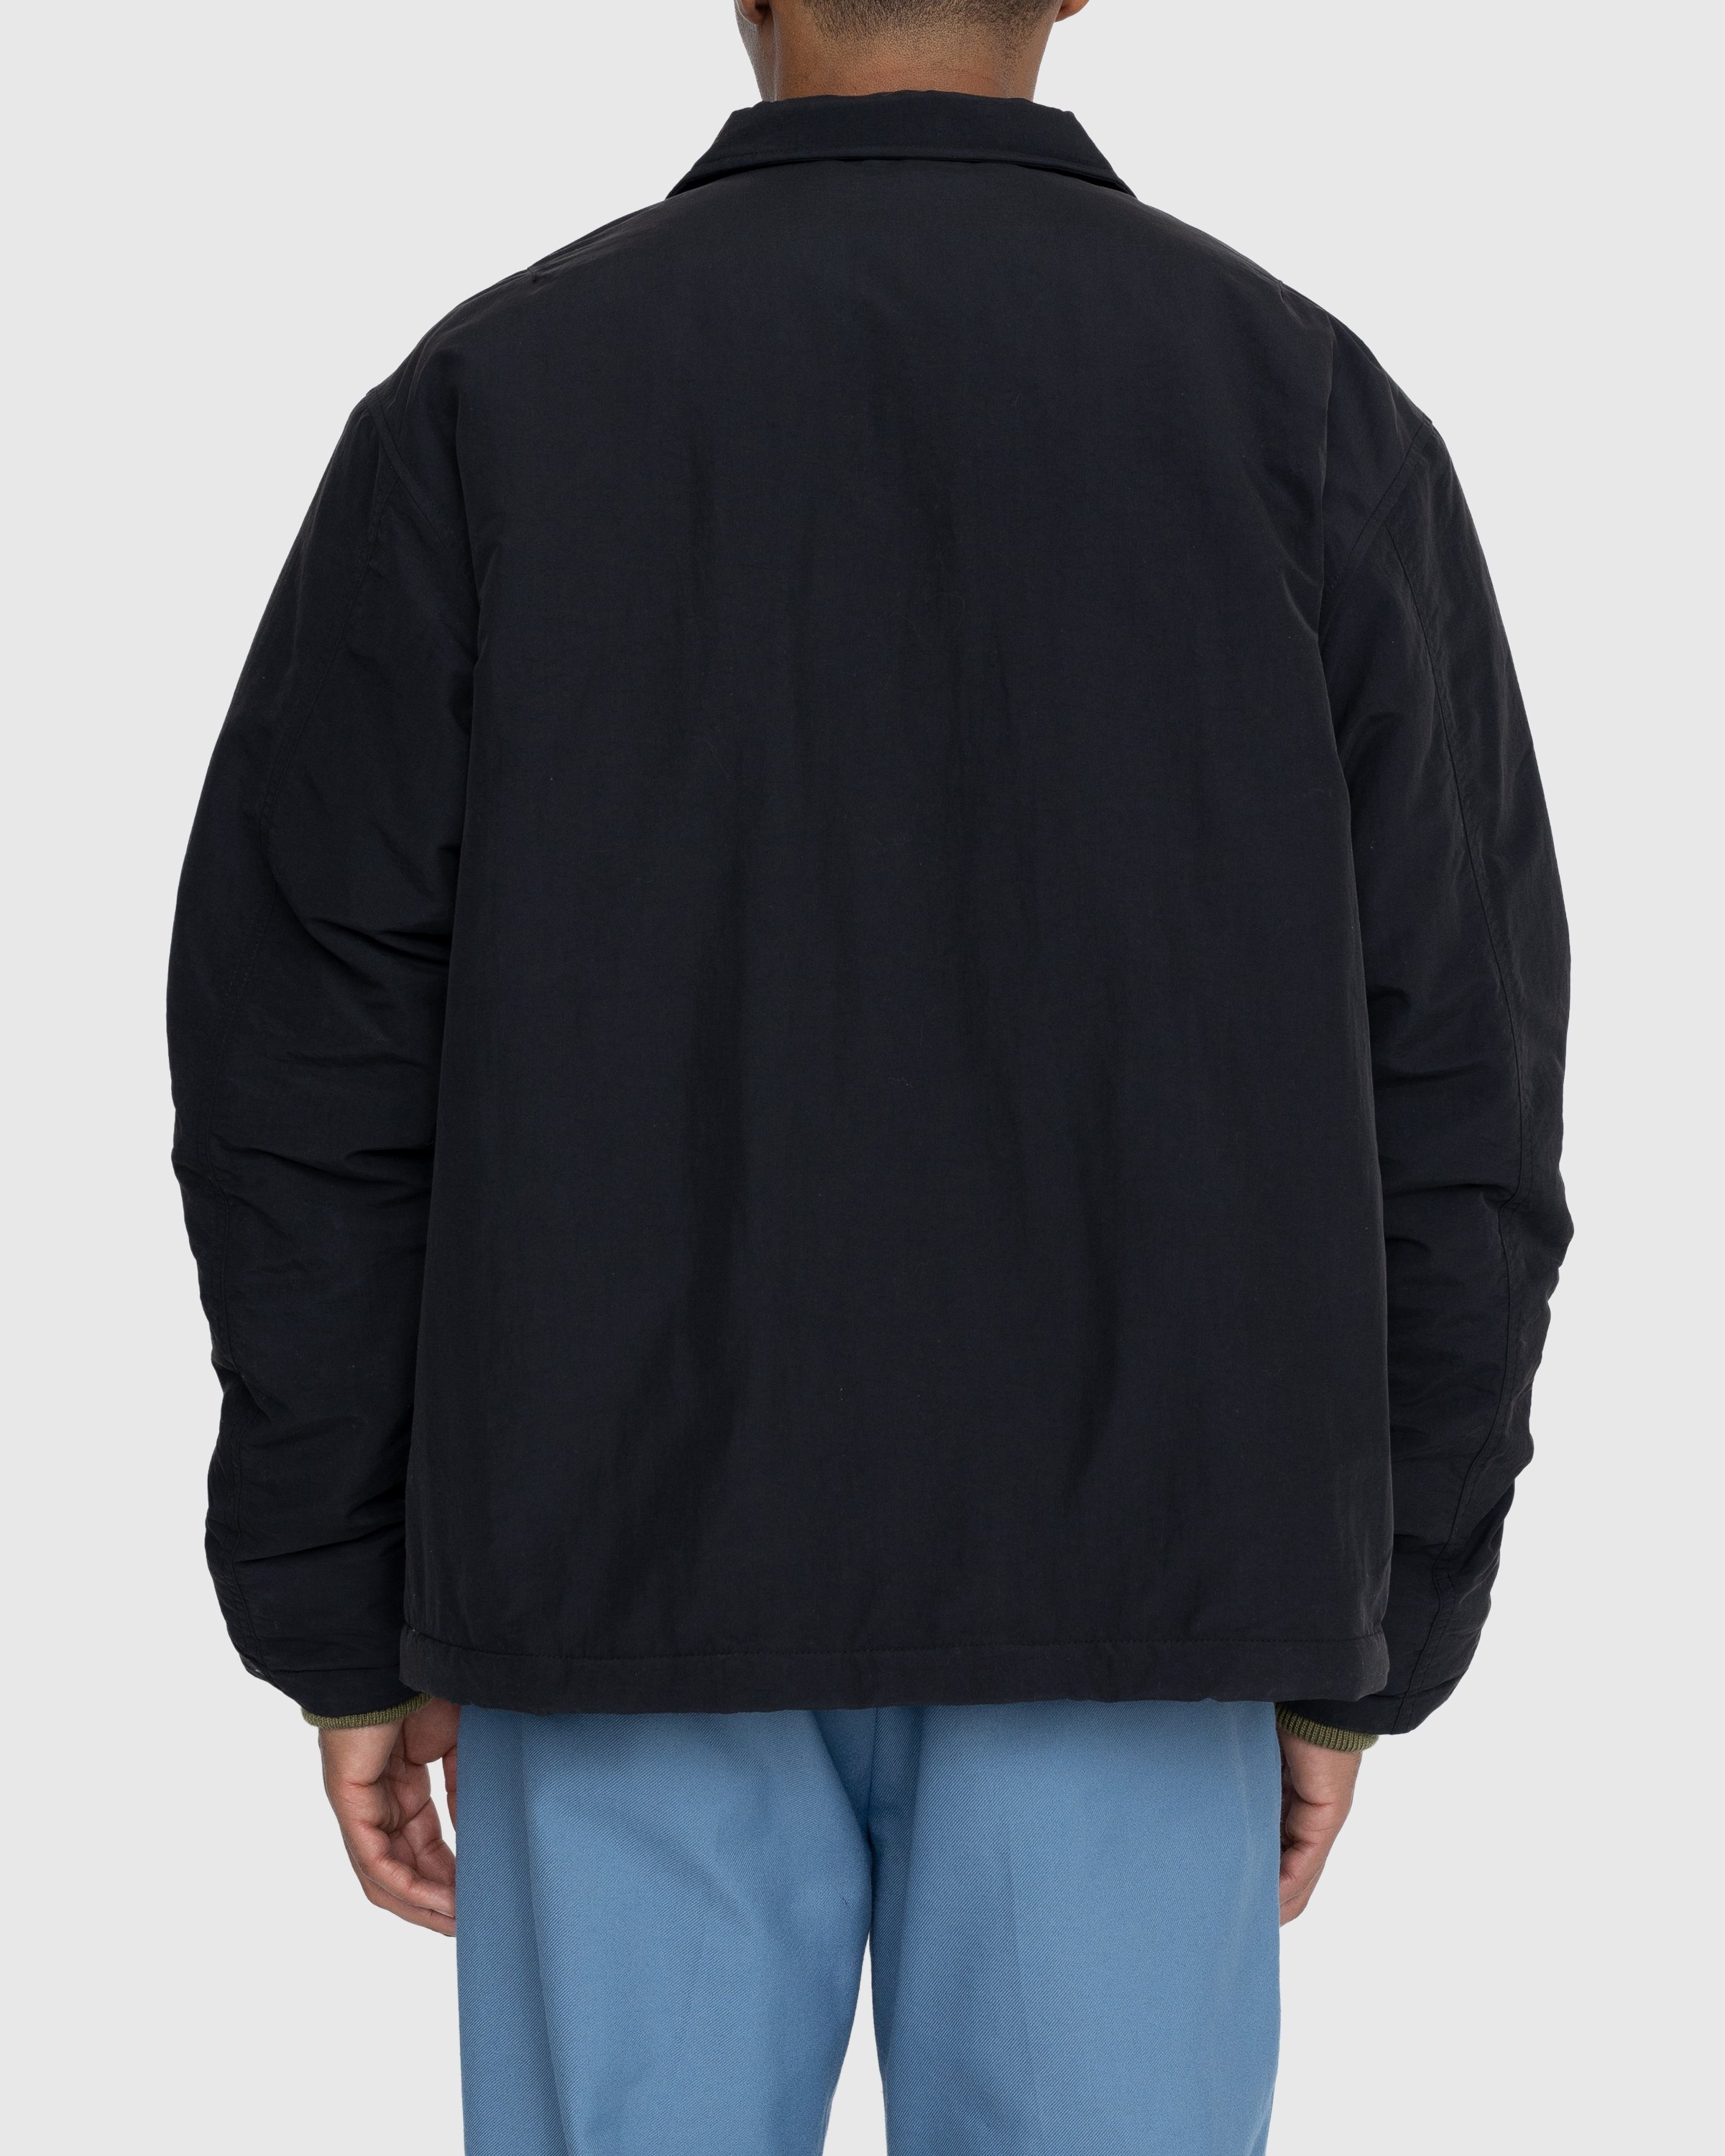 Highsnobiety – Insulated Coach Jacket Black - Outerwear - Black - Image 4